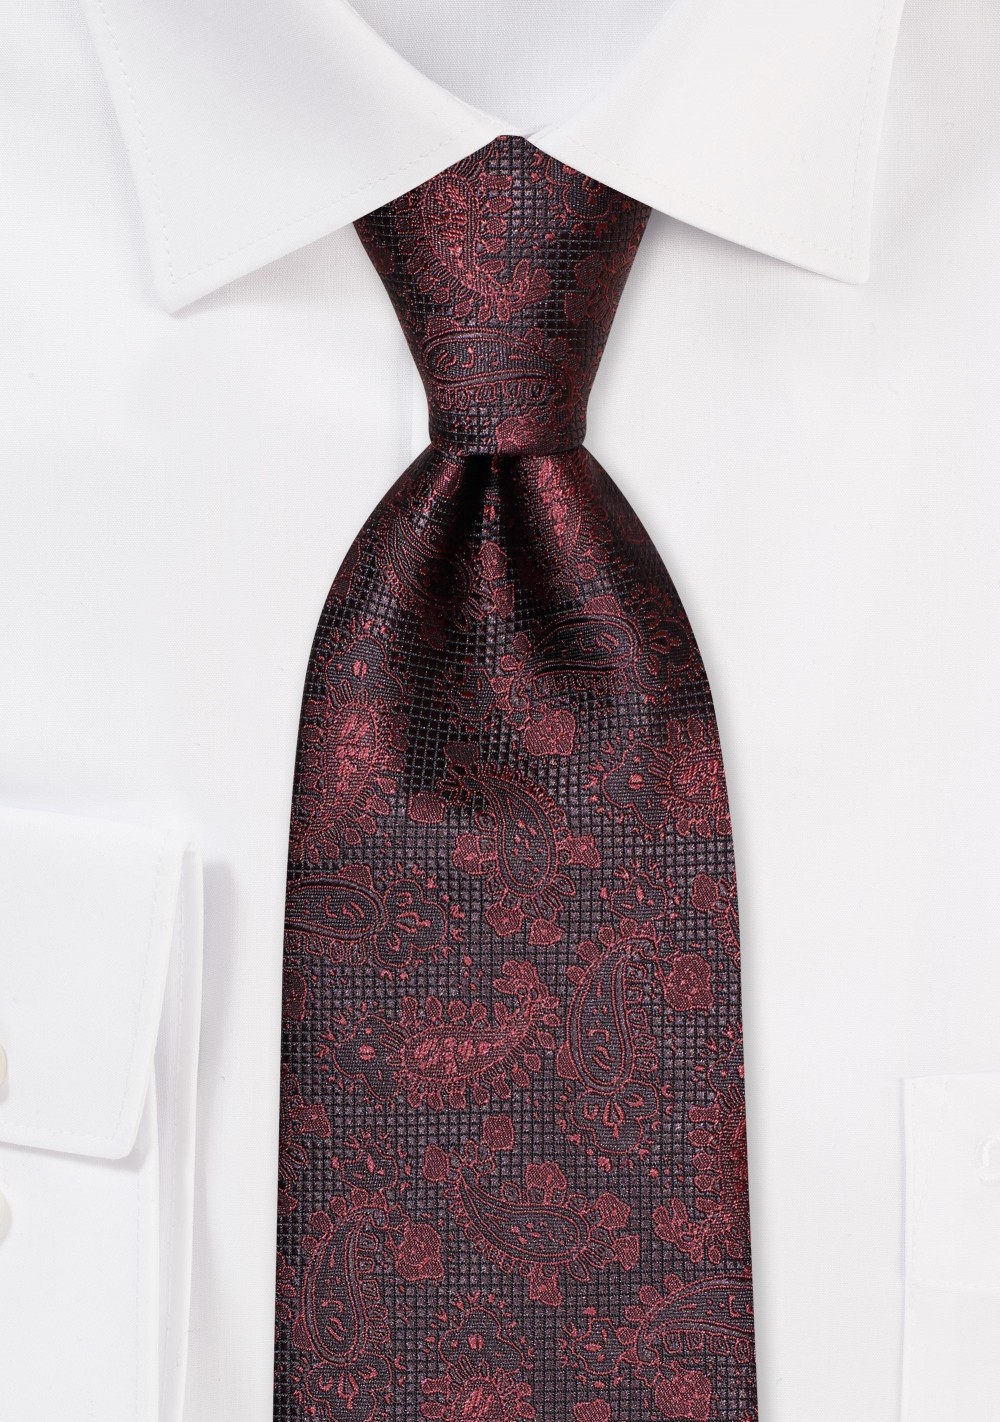 Textured Paisley Tie in Rosewood